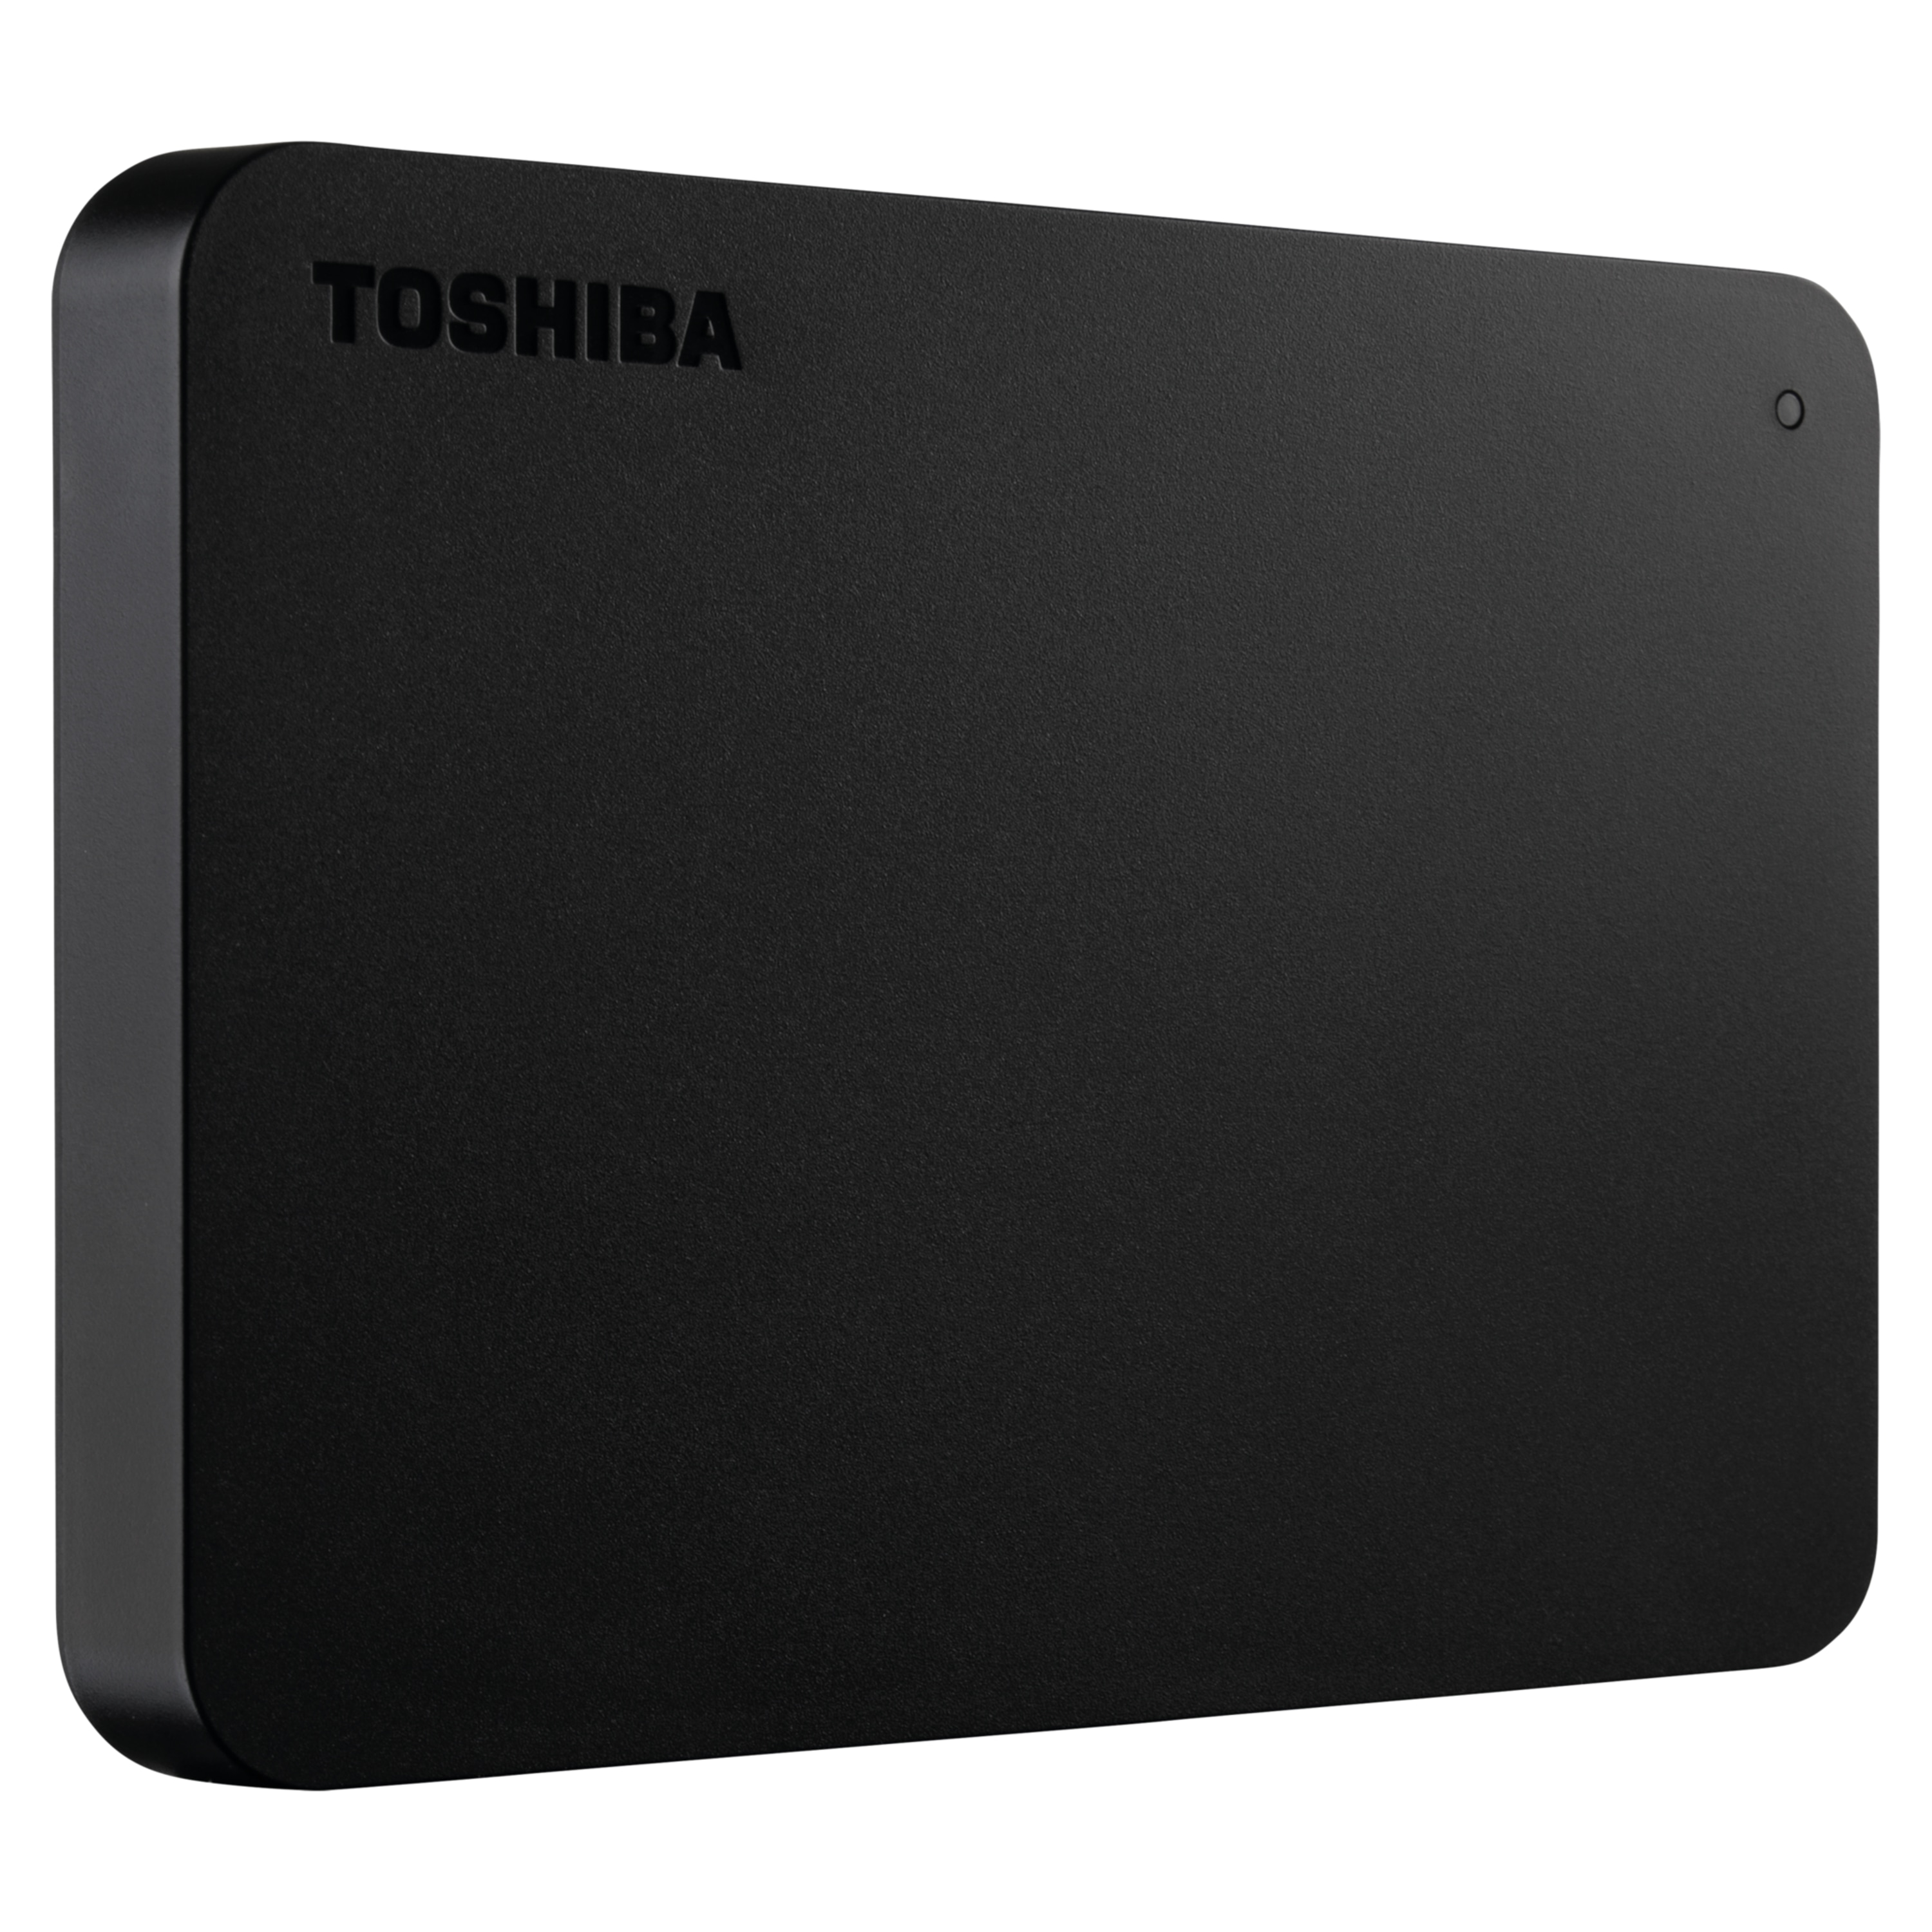 TOSHIBA CANVIO Basics 1 TB externe 2,5'' Festplatte, USB 3.0, Plug & Play, Stromversorgung über USB, schlankes Design